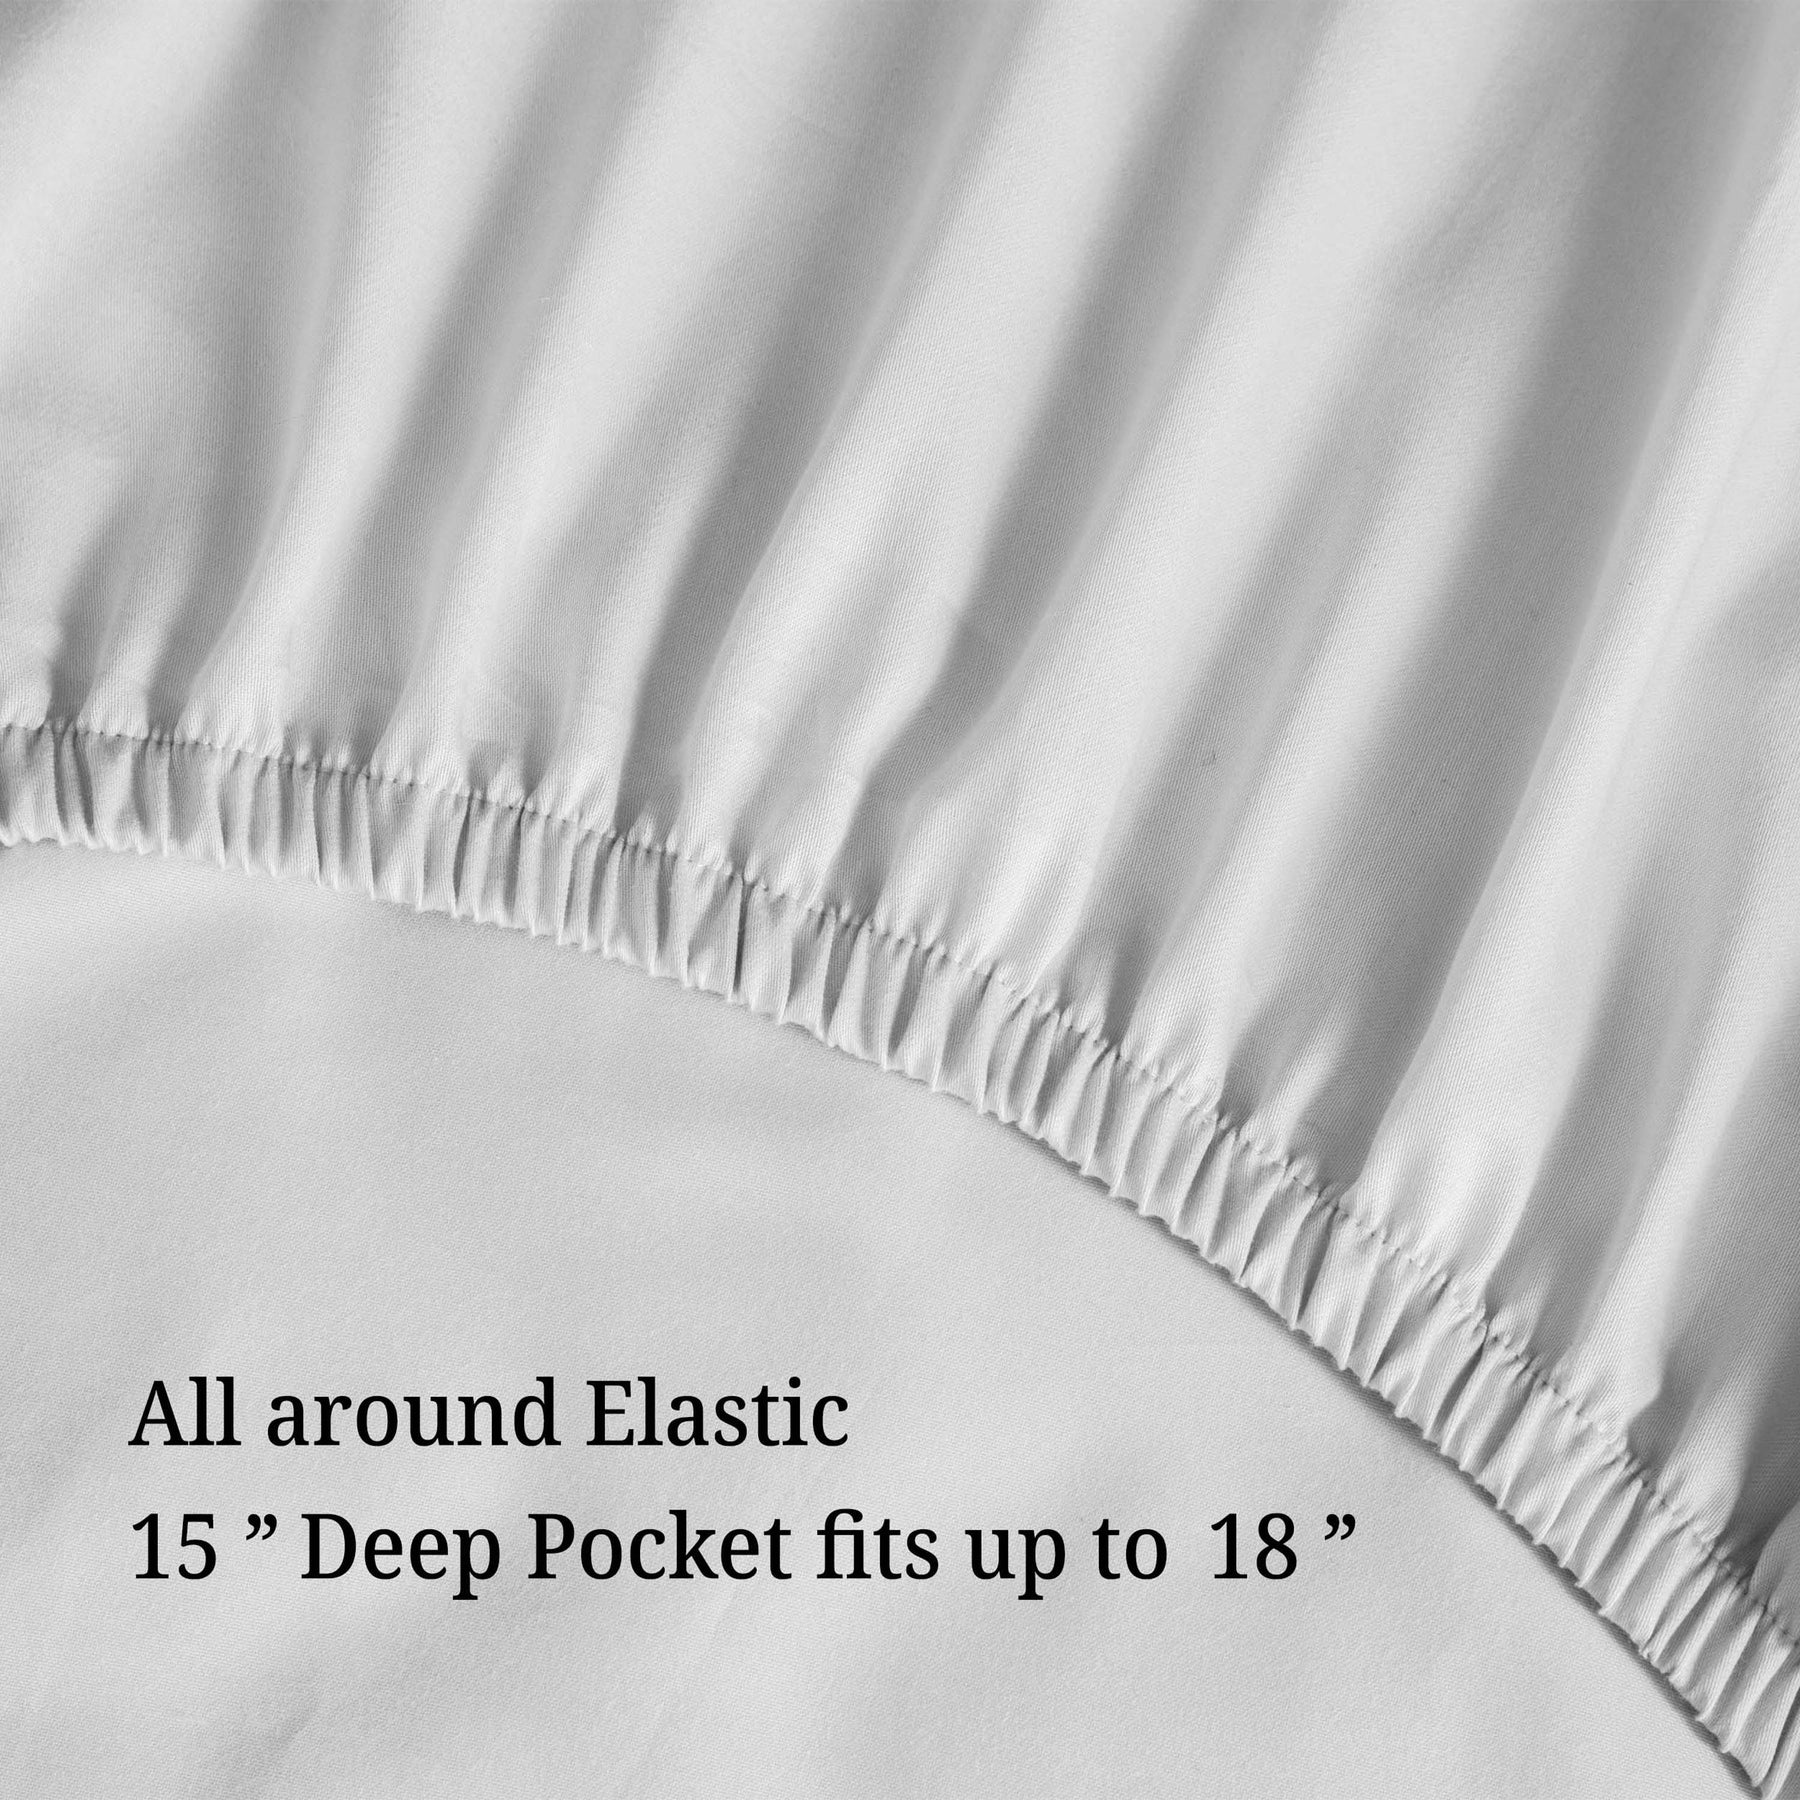 Egyptian Cotton 300 Thread Count Solid Deep Pocket Sheet Set - LightGrey